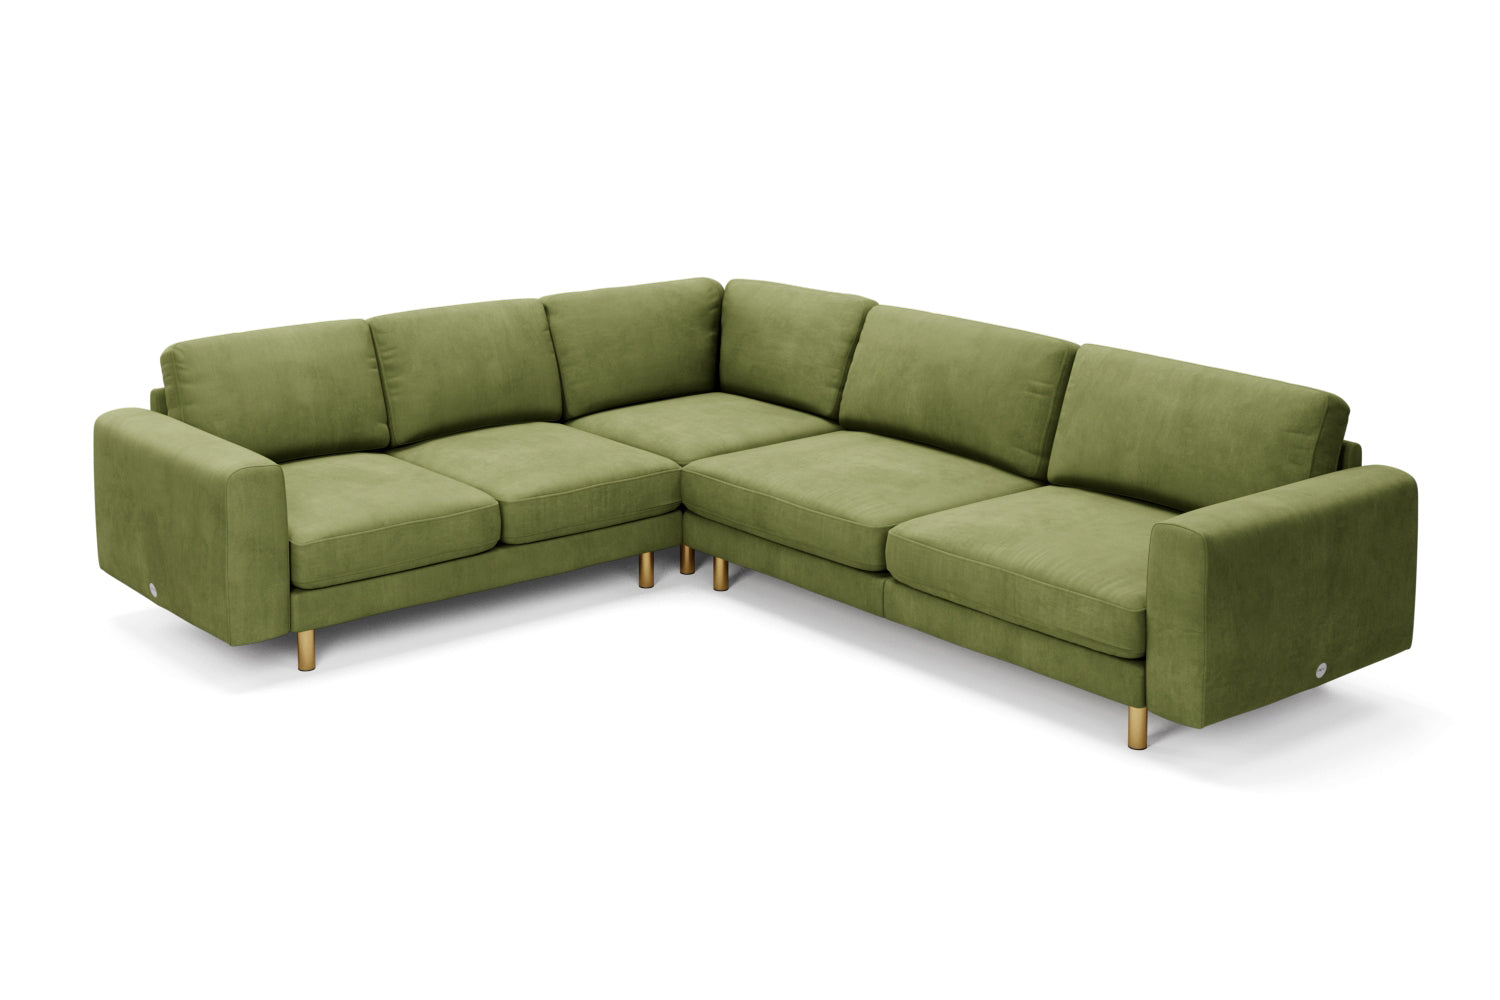 The Big Chill - Large Corner Sofa - Olive